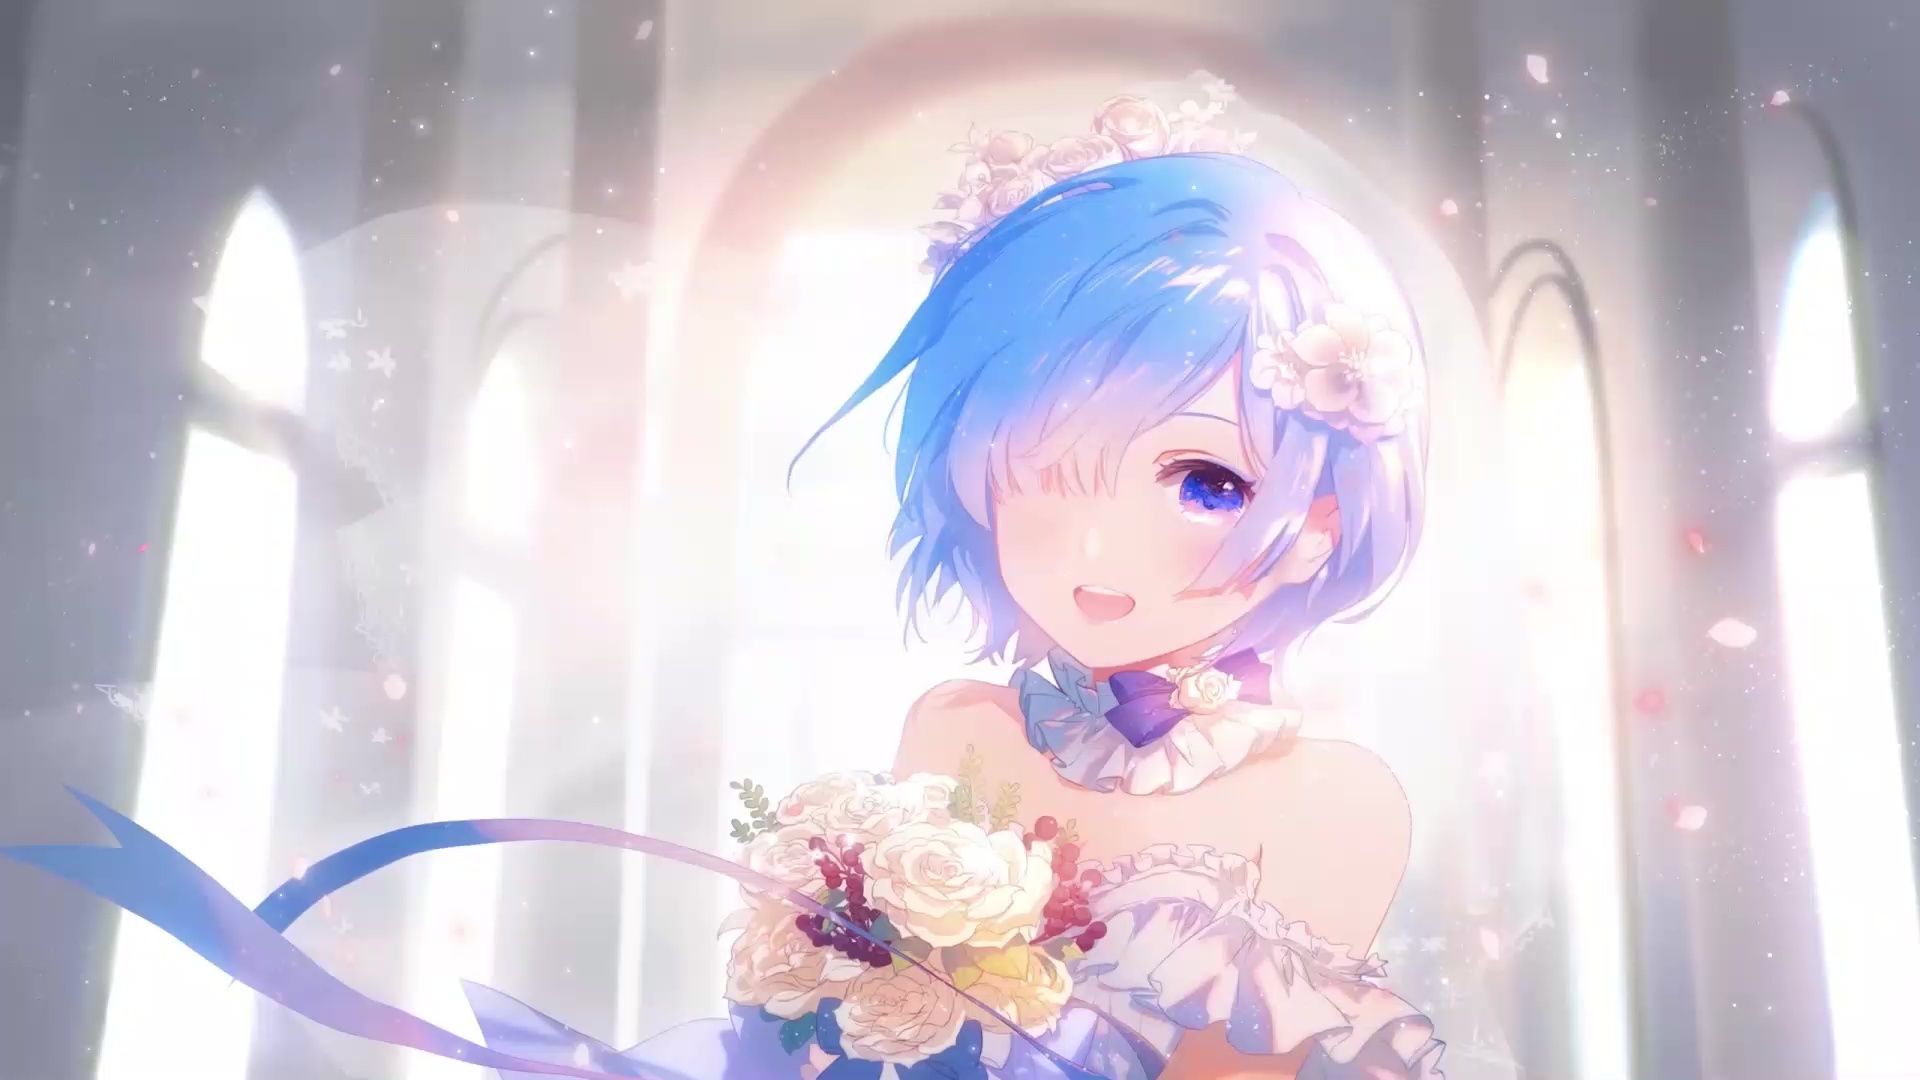 Rem In Wedding Dress Re:Zero Live Wallpaper. Live wallpaper, Anime, Wallpaper